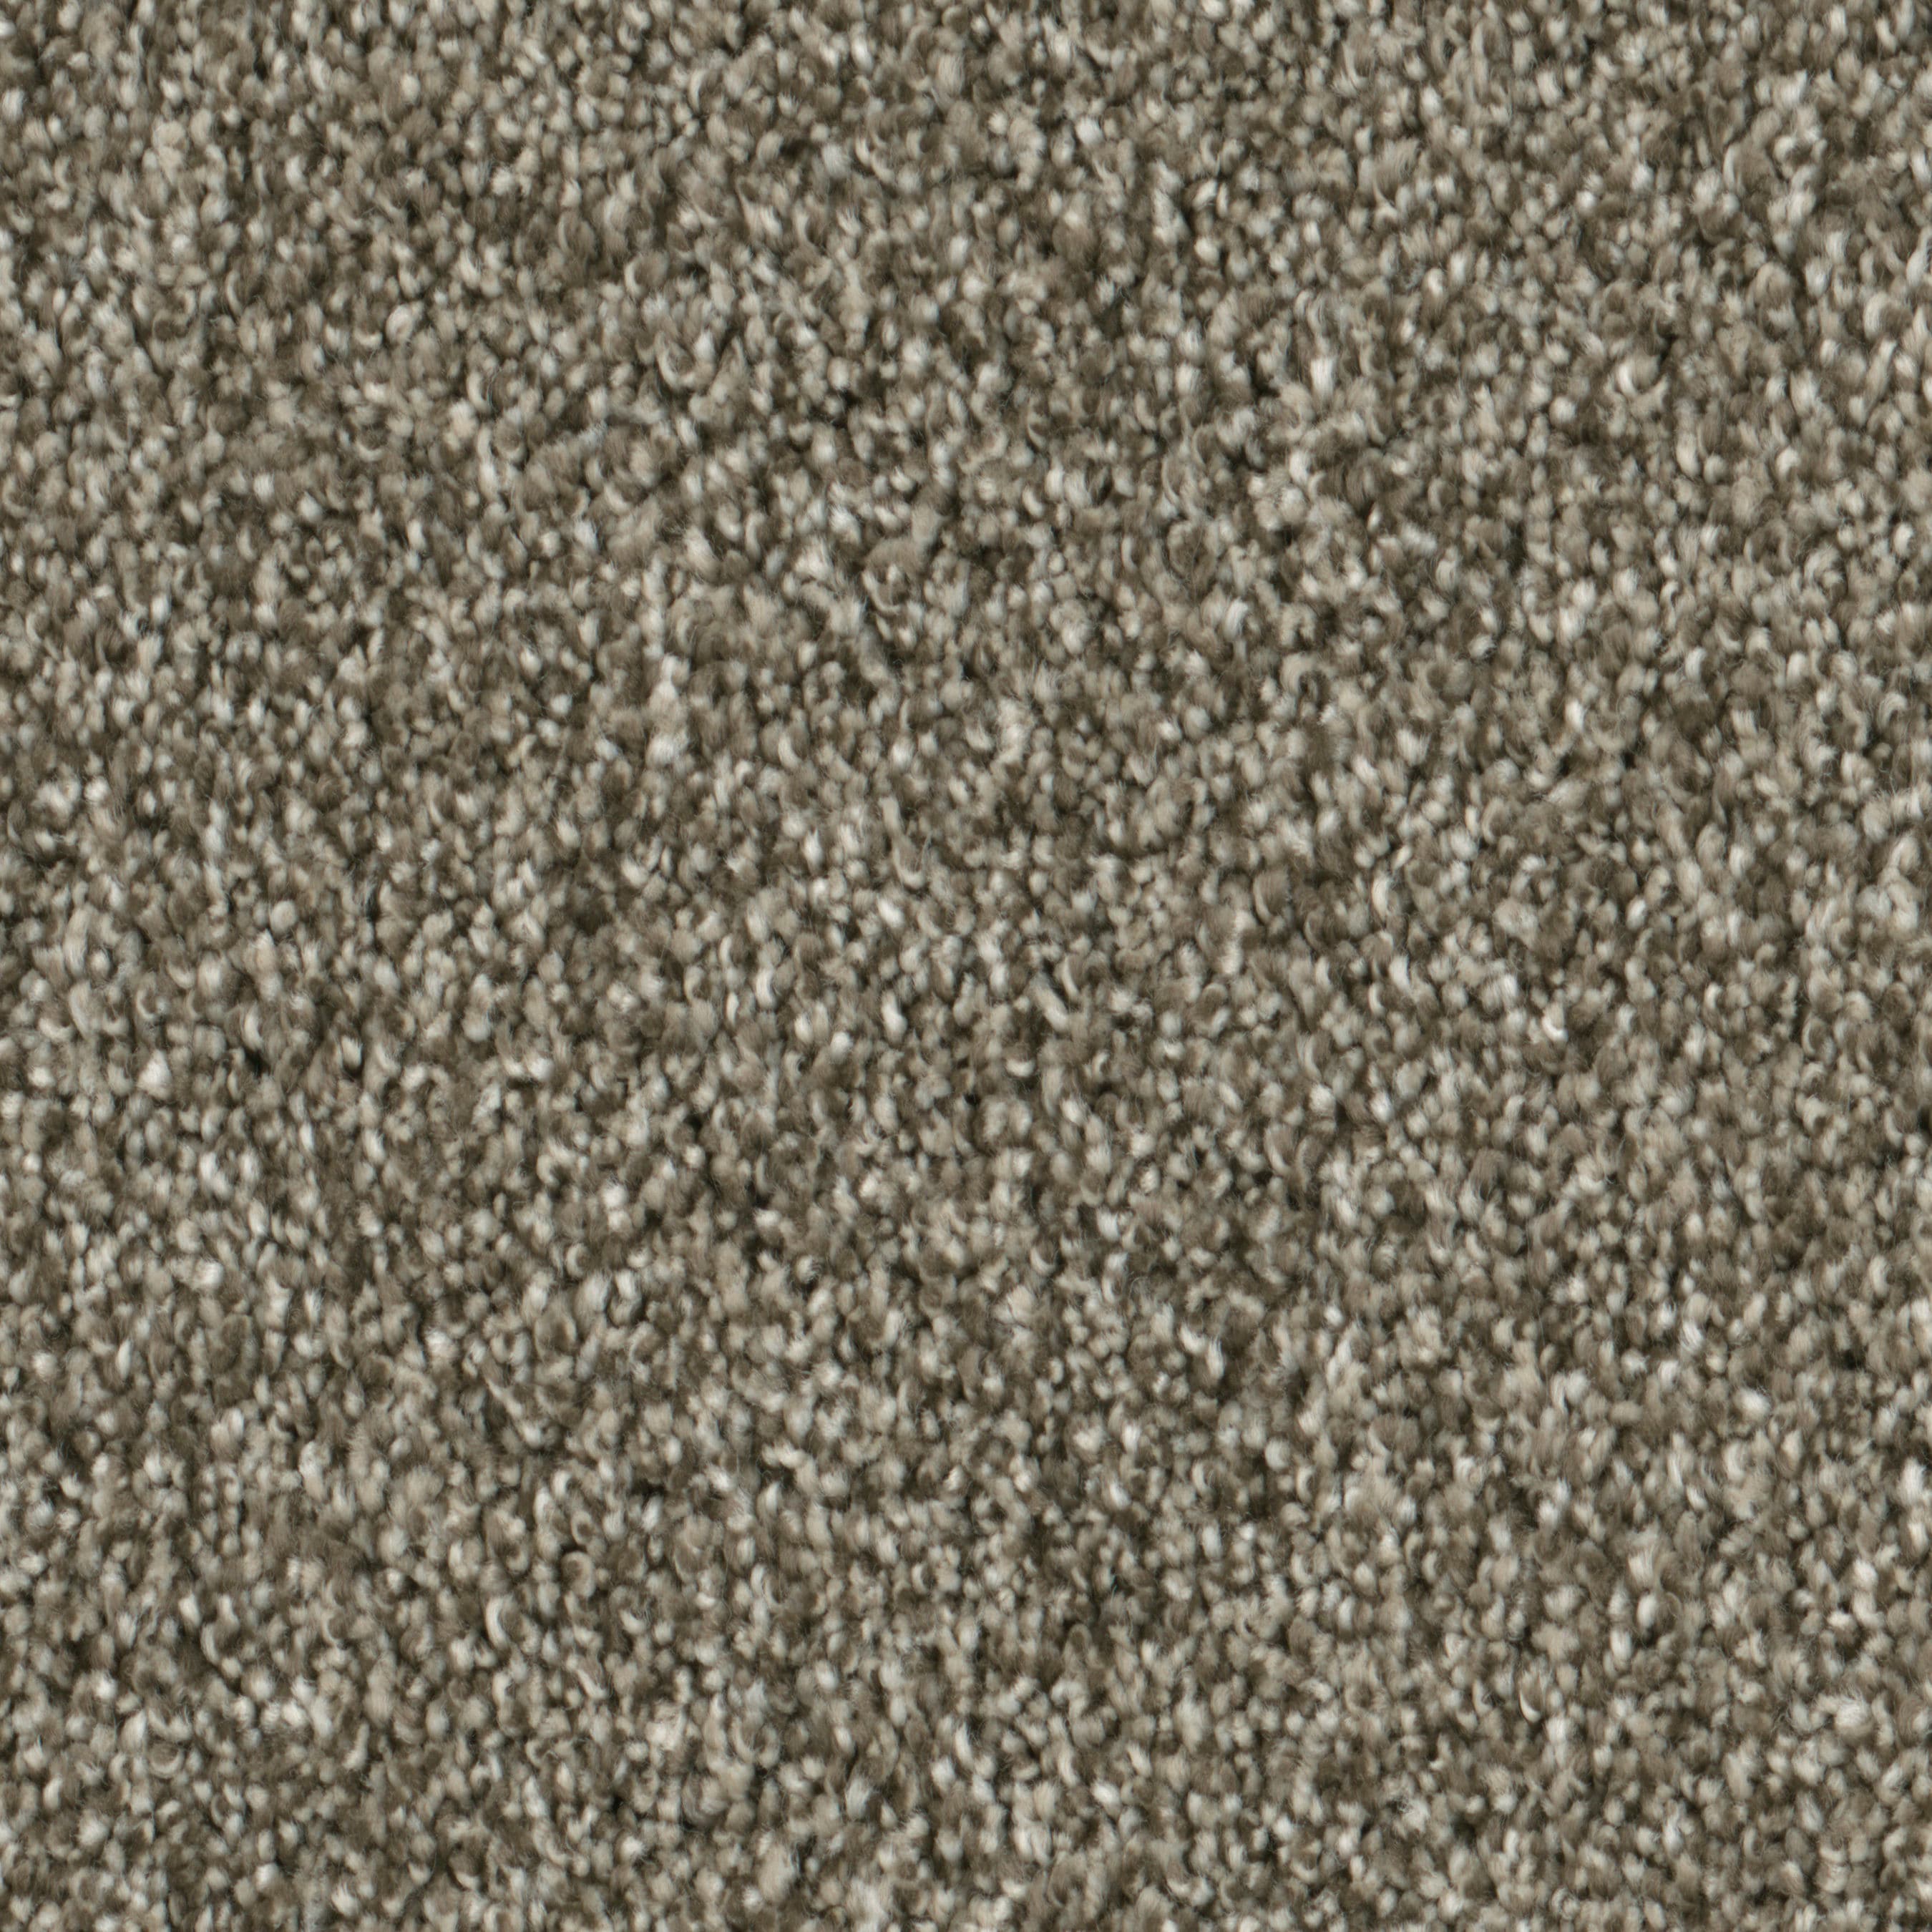 (Sample) Lenox Park Parkway Textured Indoor Carpet | - STAINMASTER S9255-926-S